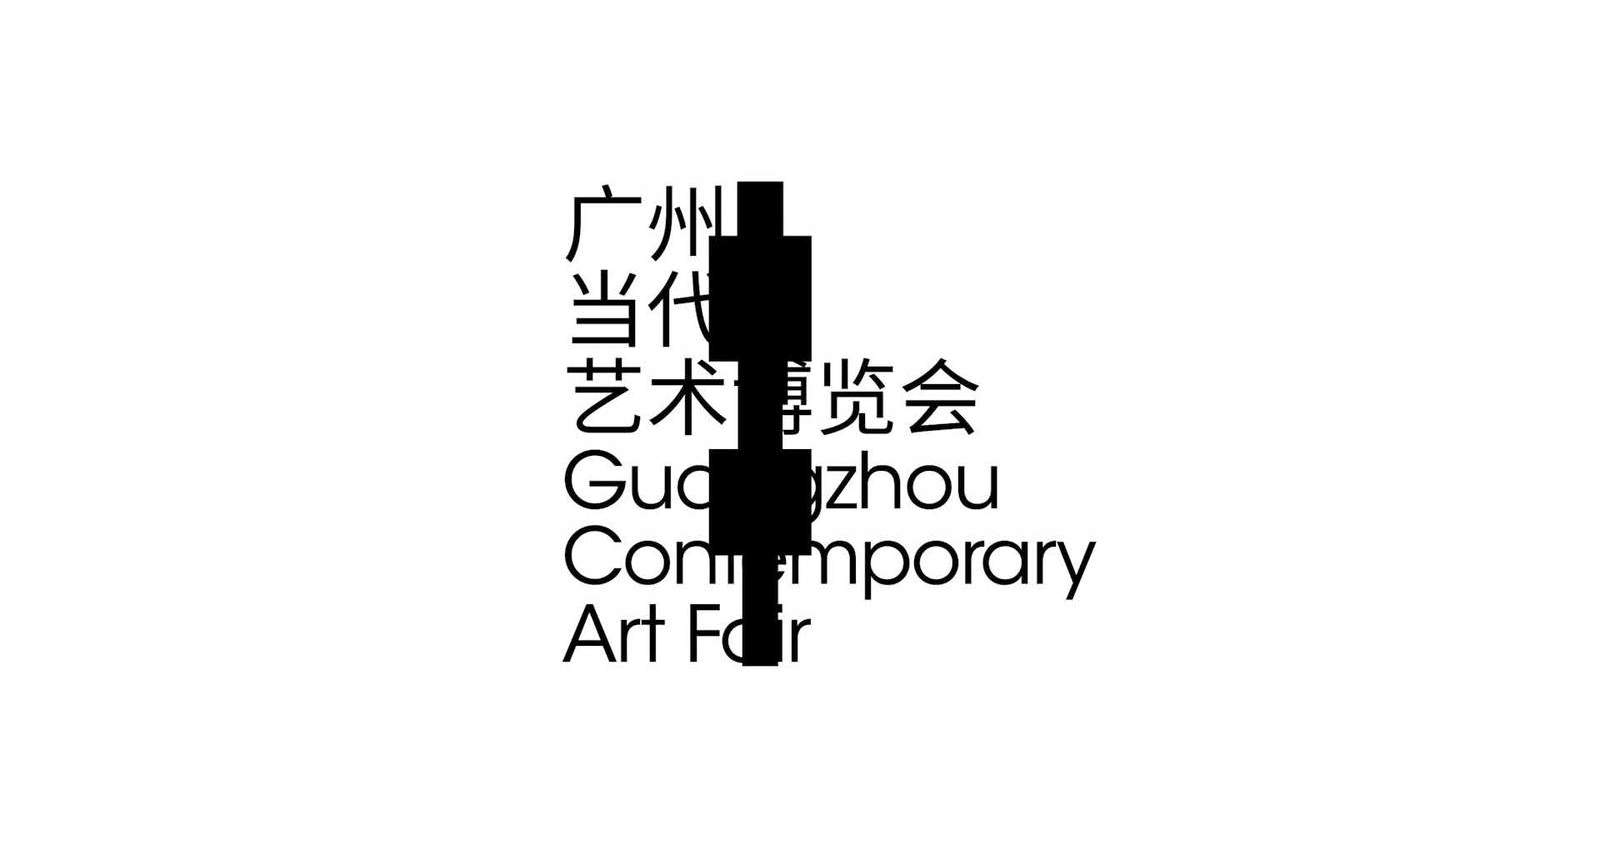 Guangzhou Contemporary Art Fair